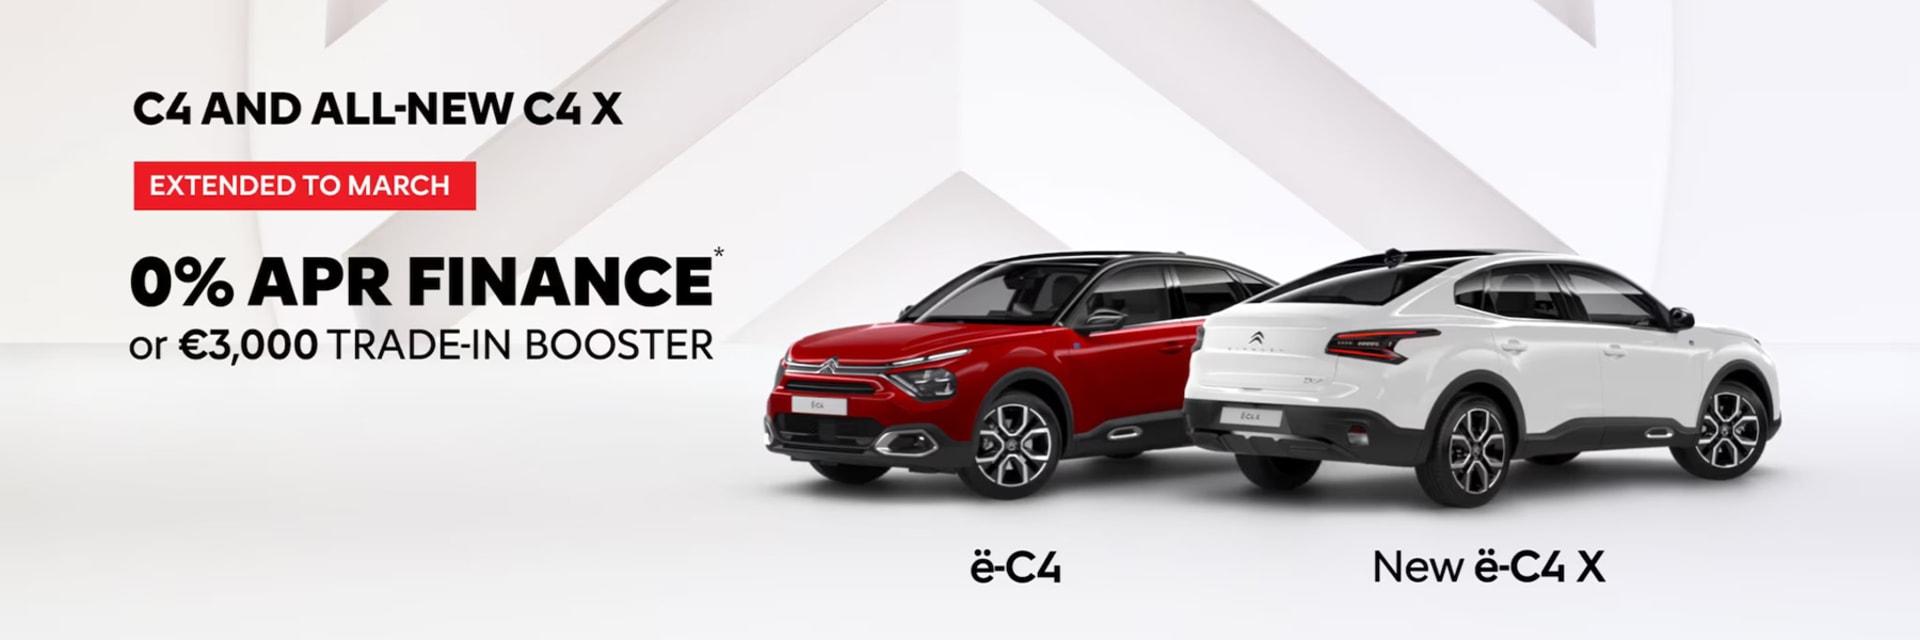 Citroën Finance Offer